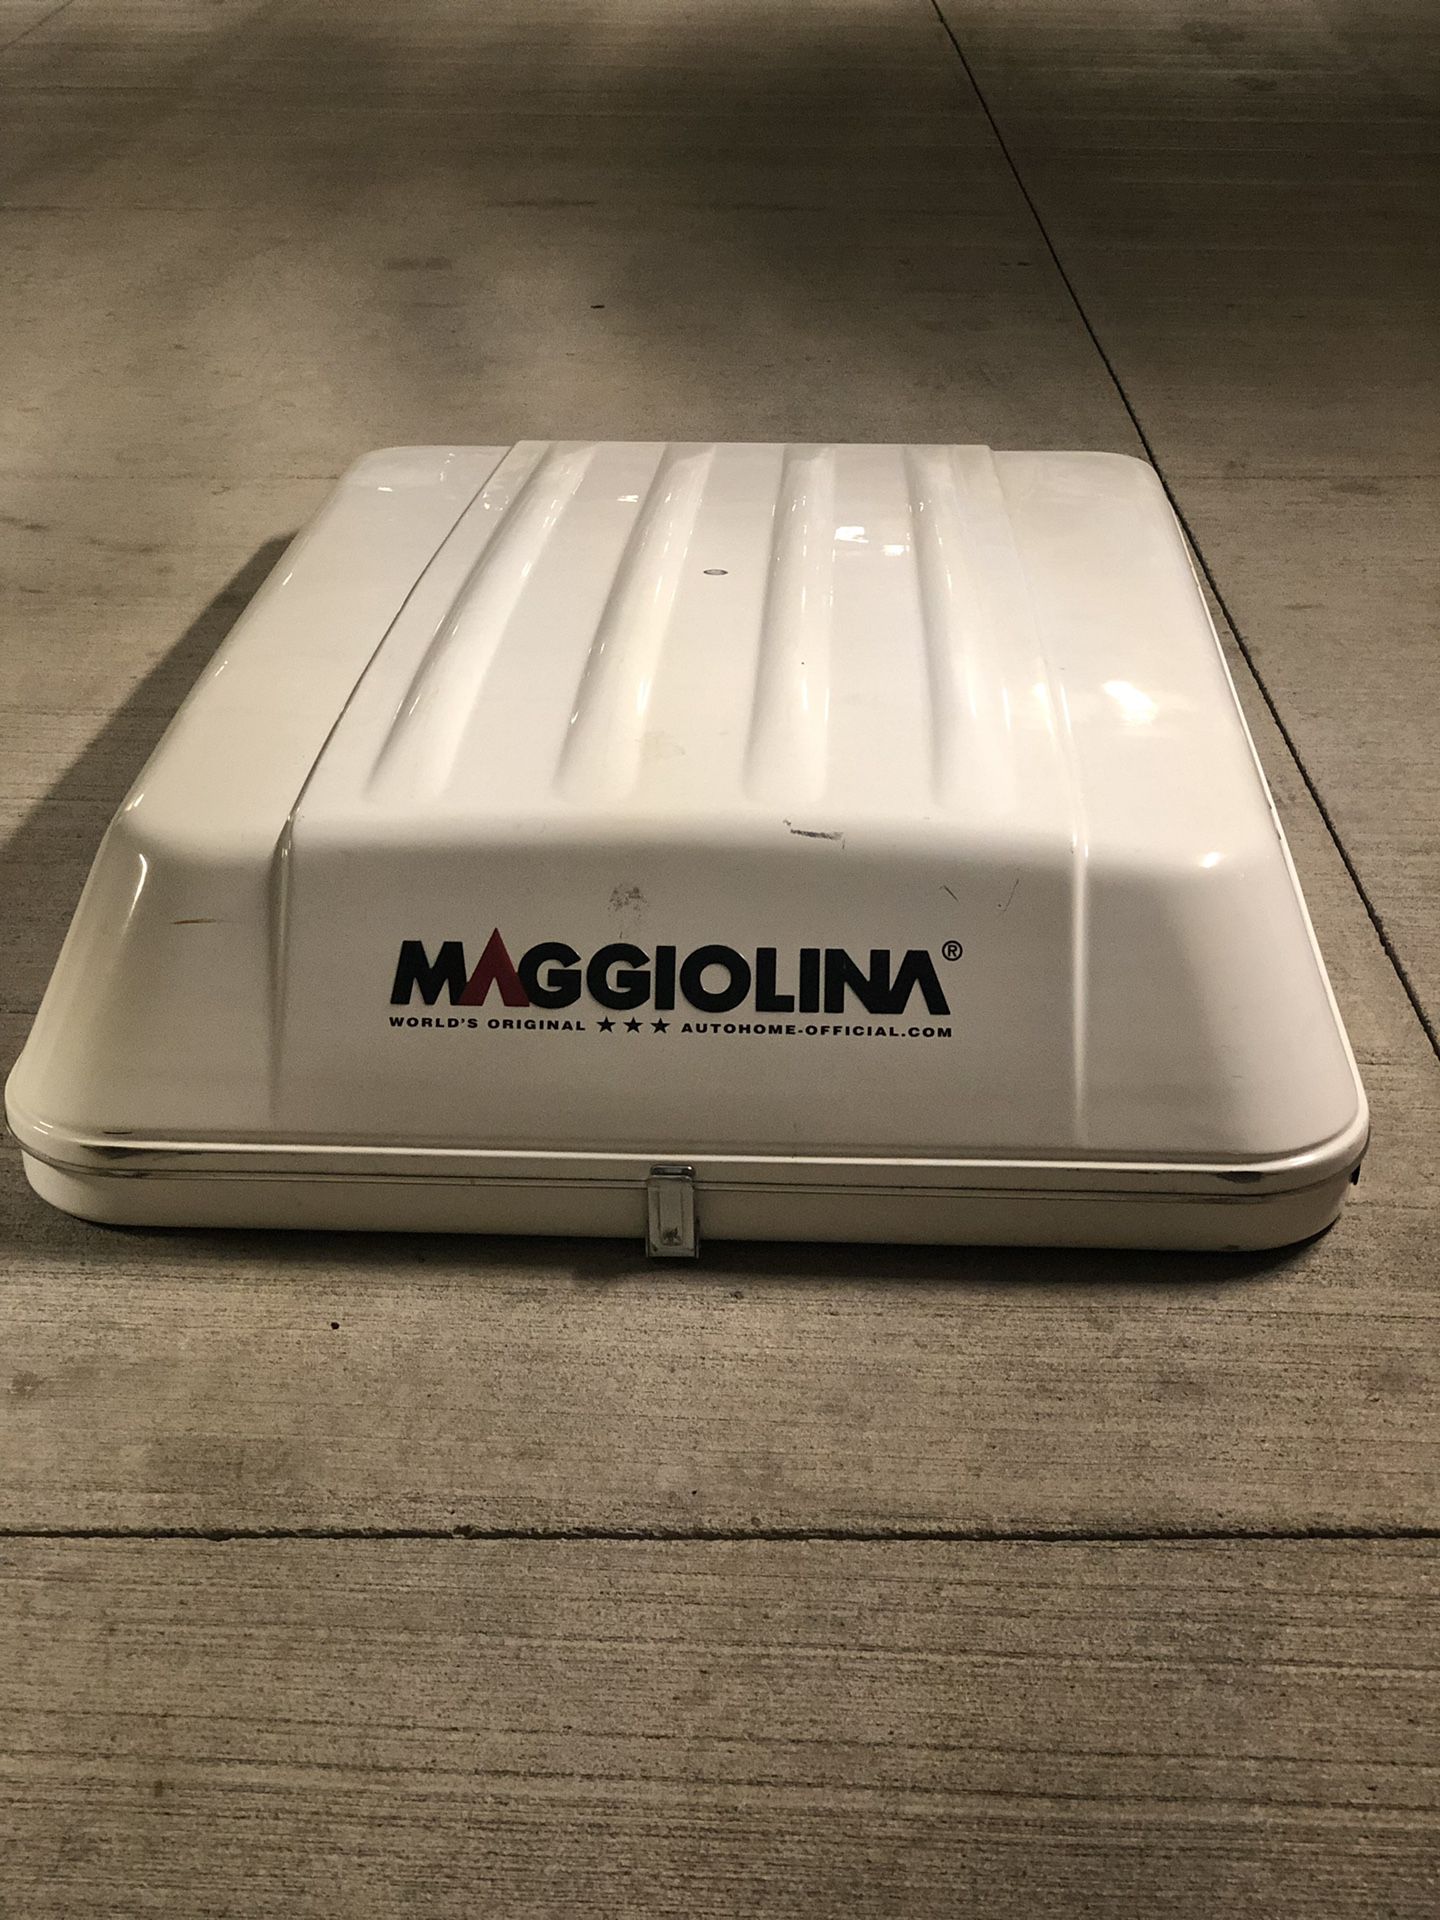 Autohome Maggiolina Car Tent